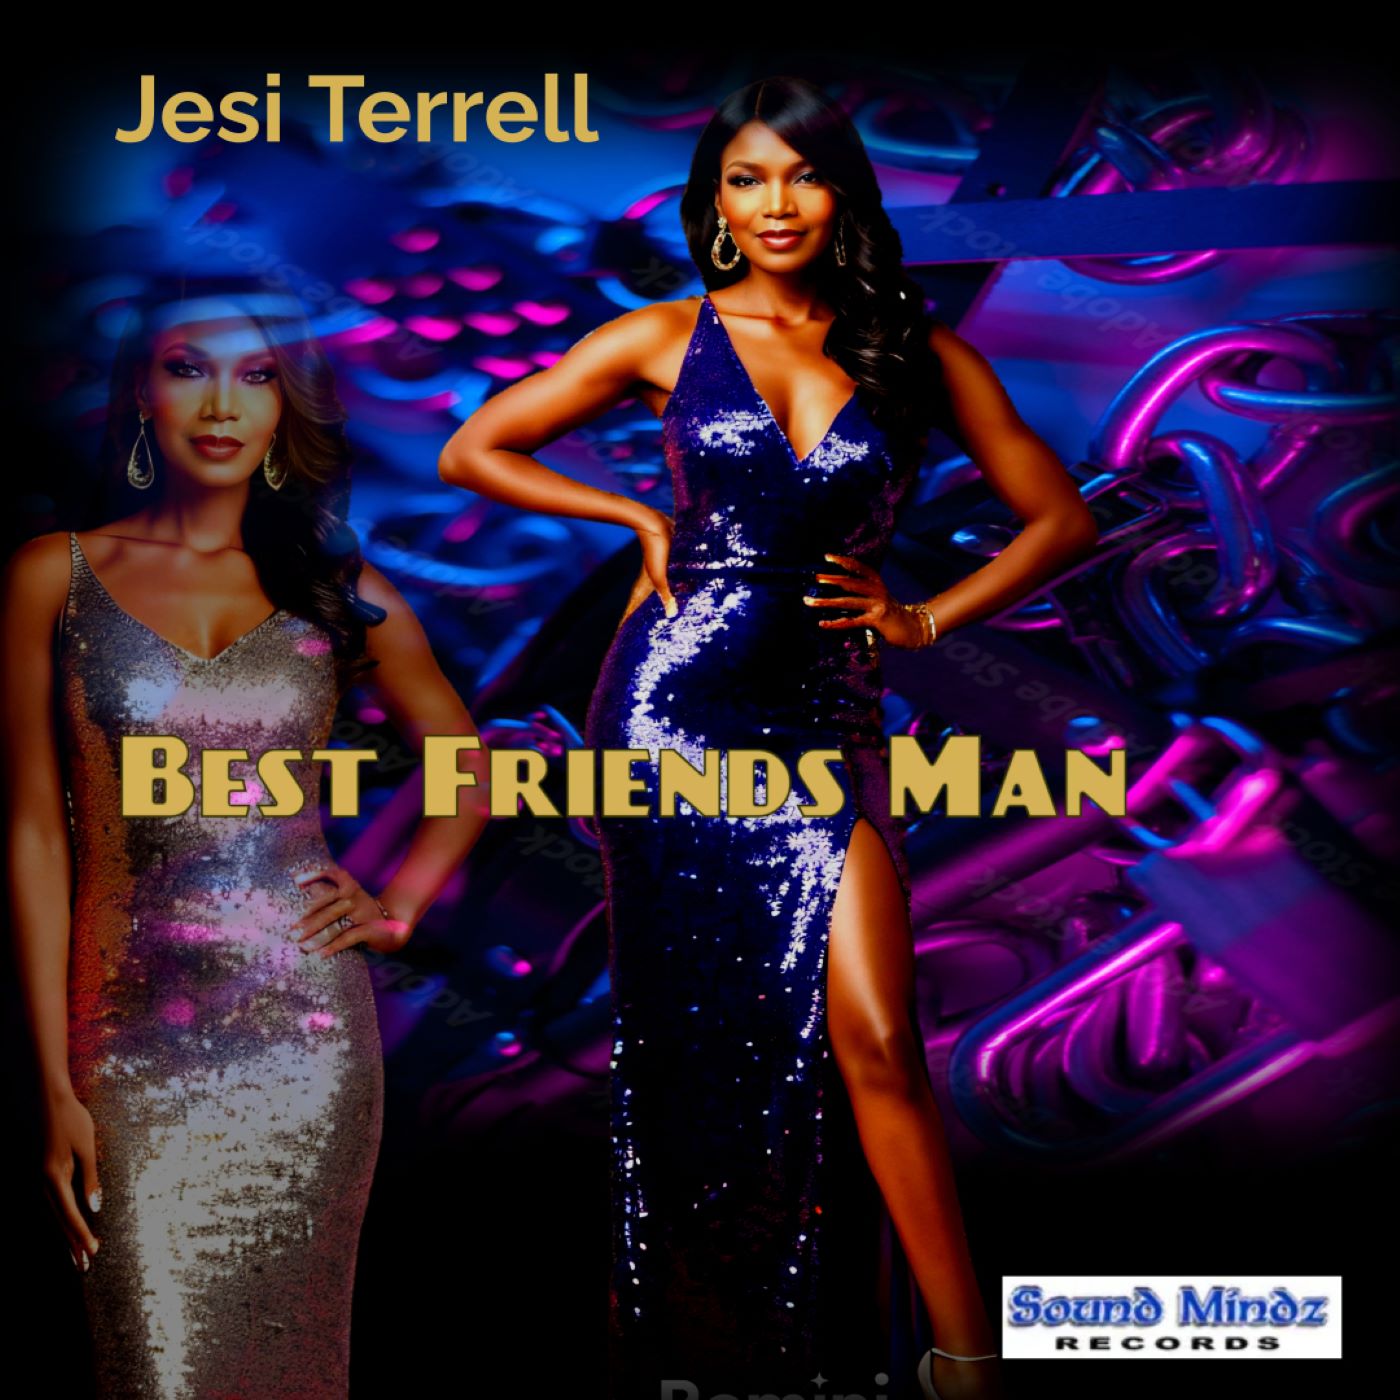 Best Friends Man CD Cover 25 (1)1400 x1400